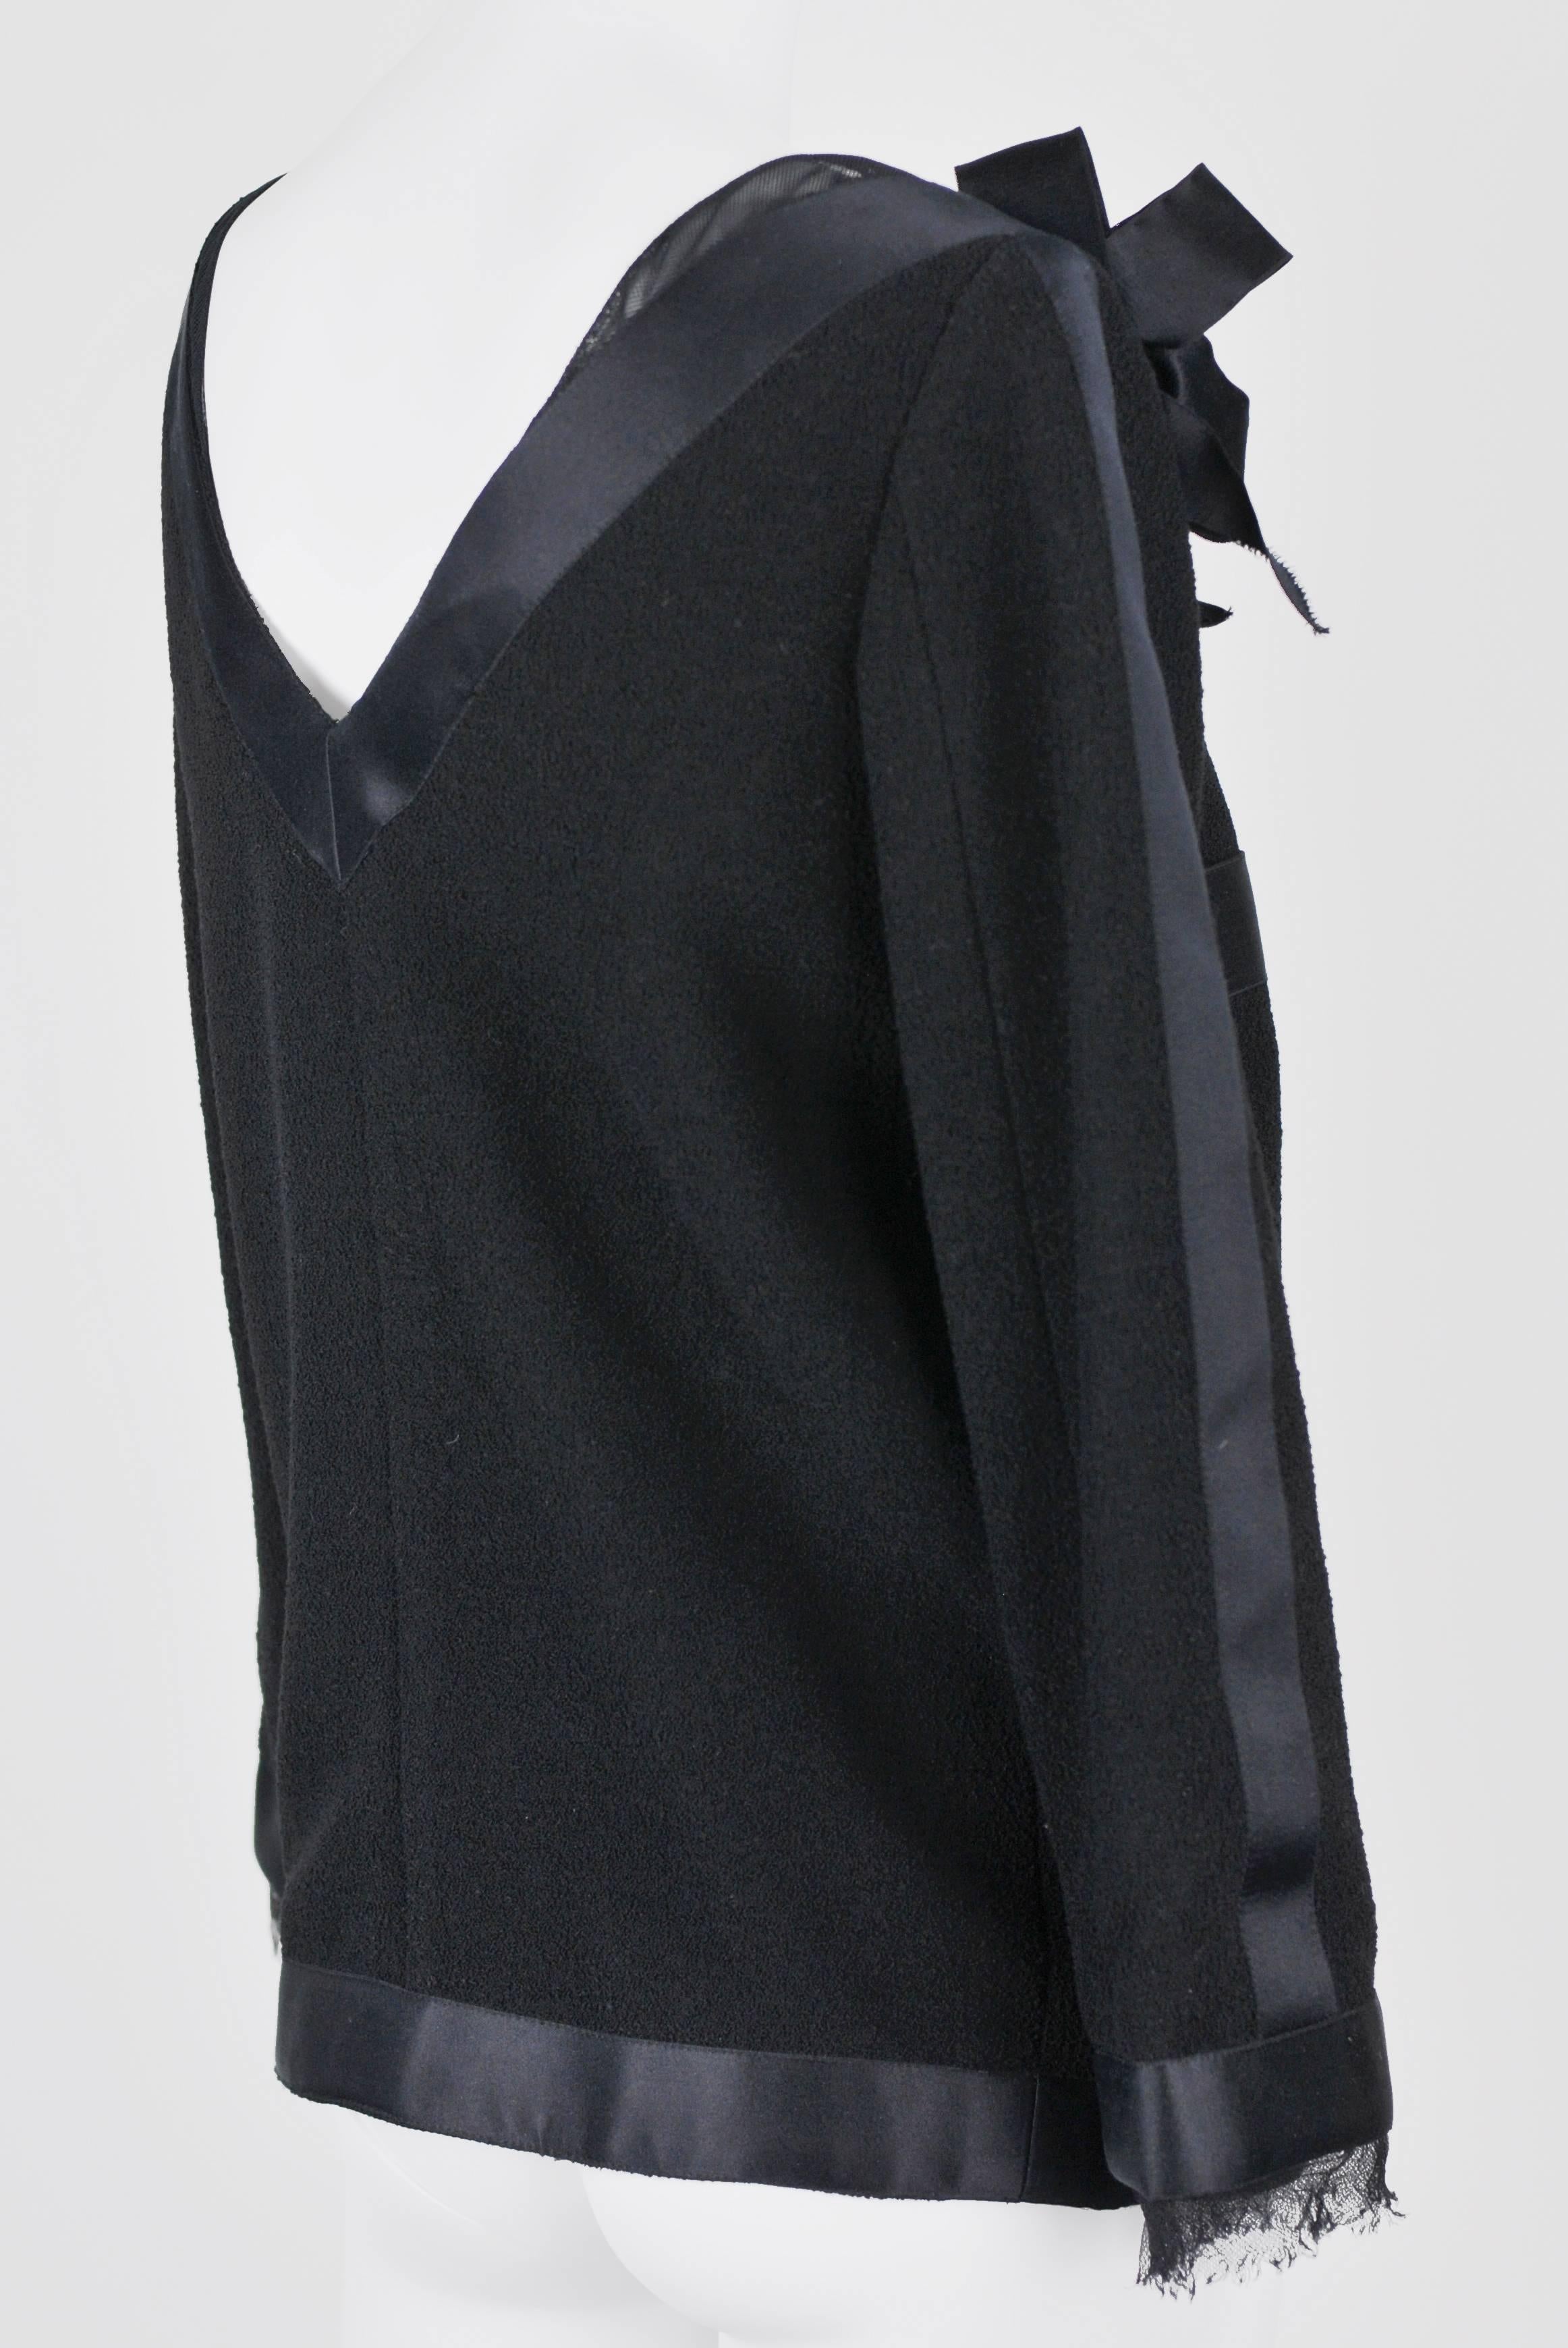 Black 2011A Chanel Wool Boucle Jacket w/Blk Satin Ribbon Trim & Gripoix Buttons FR 38